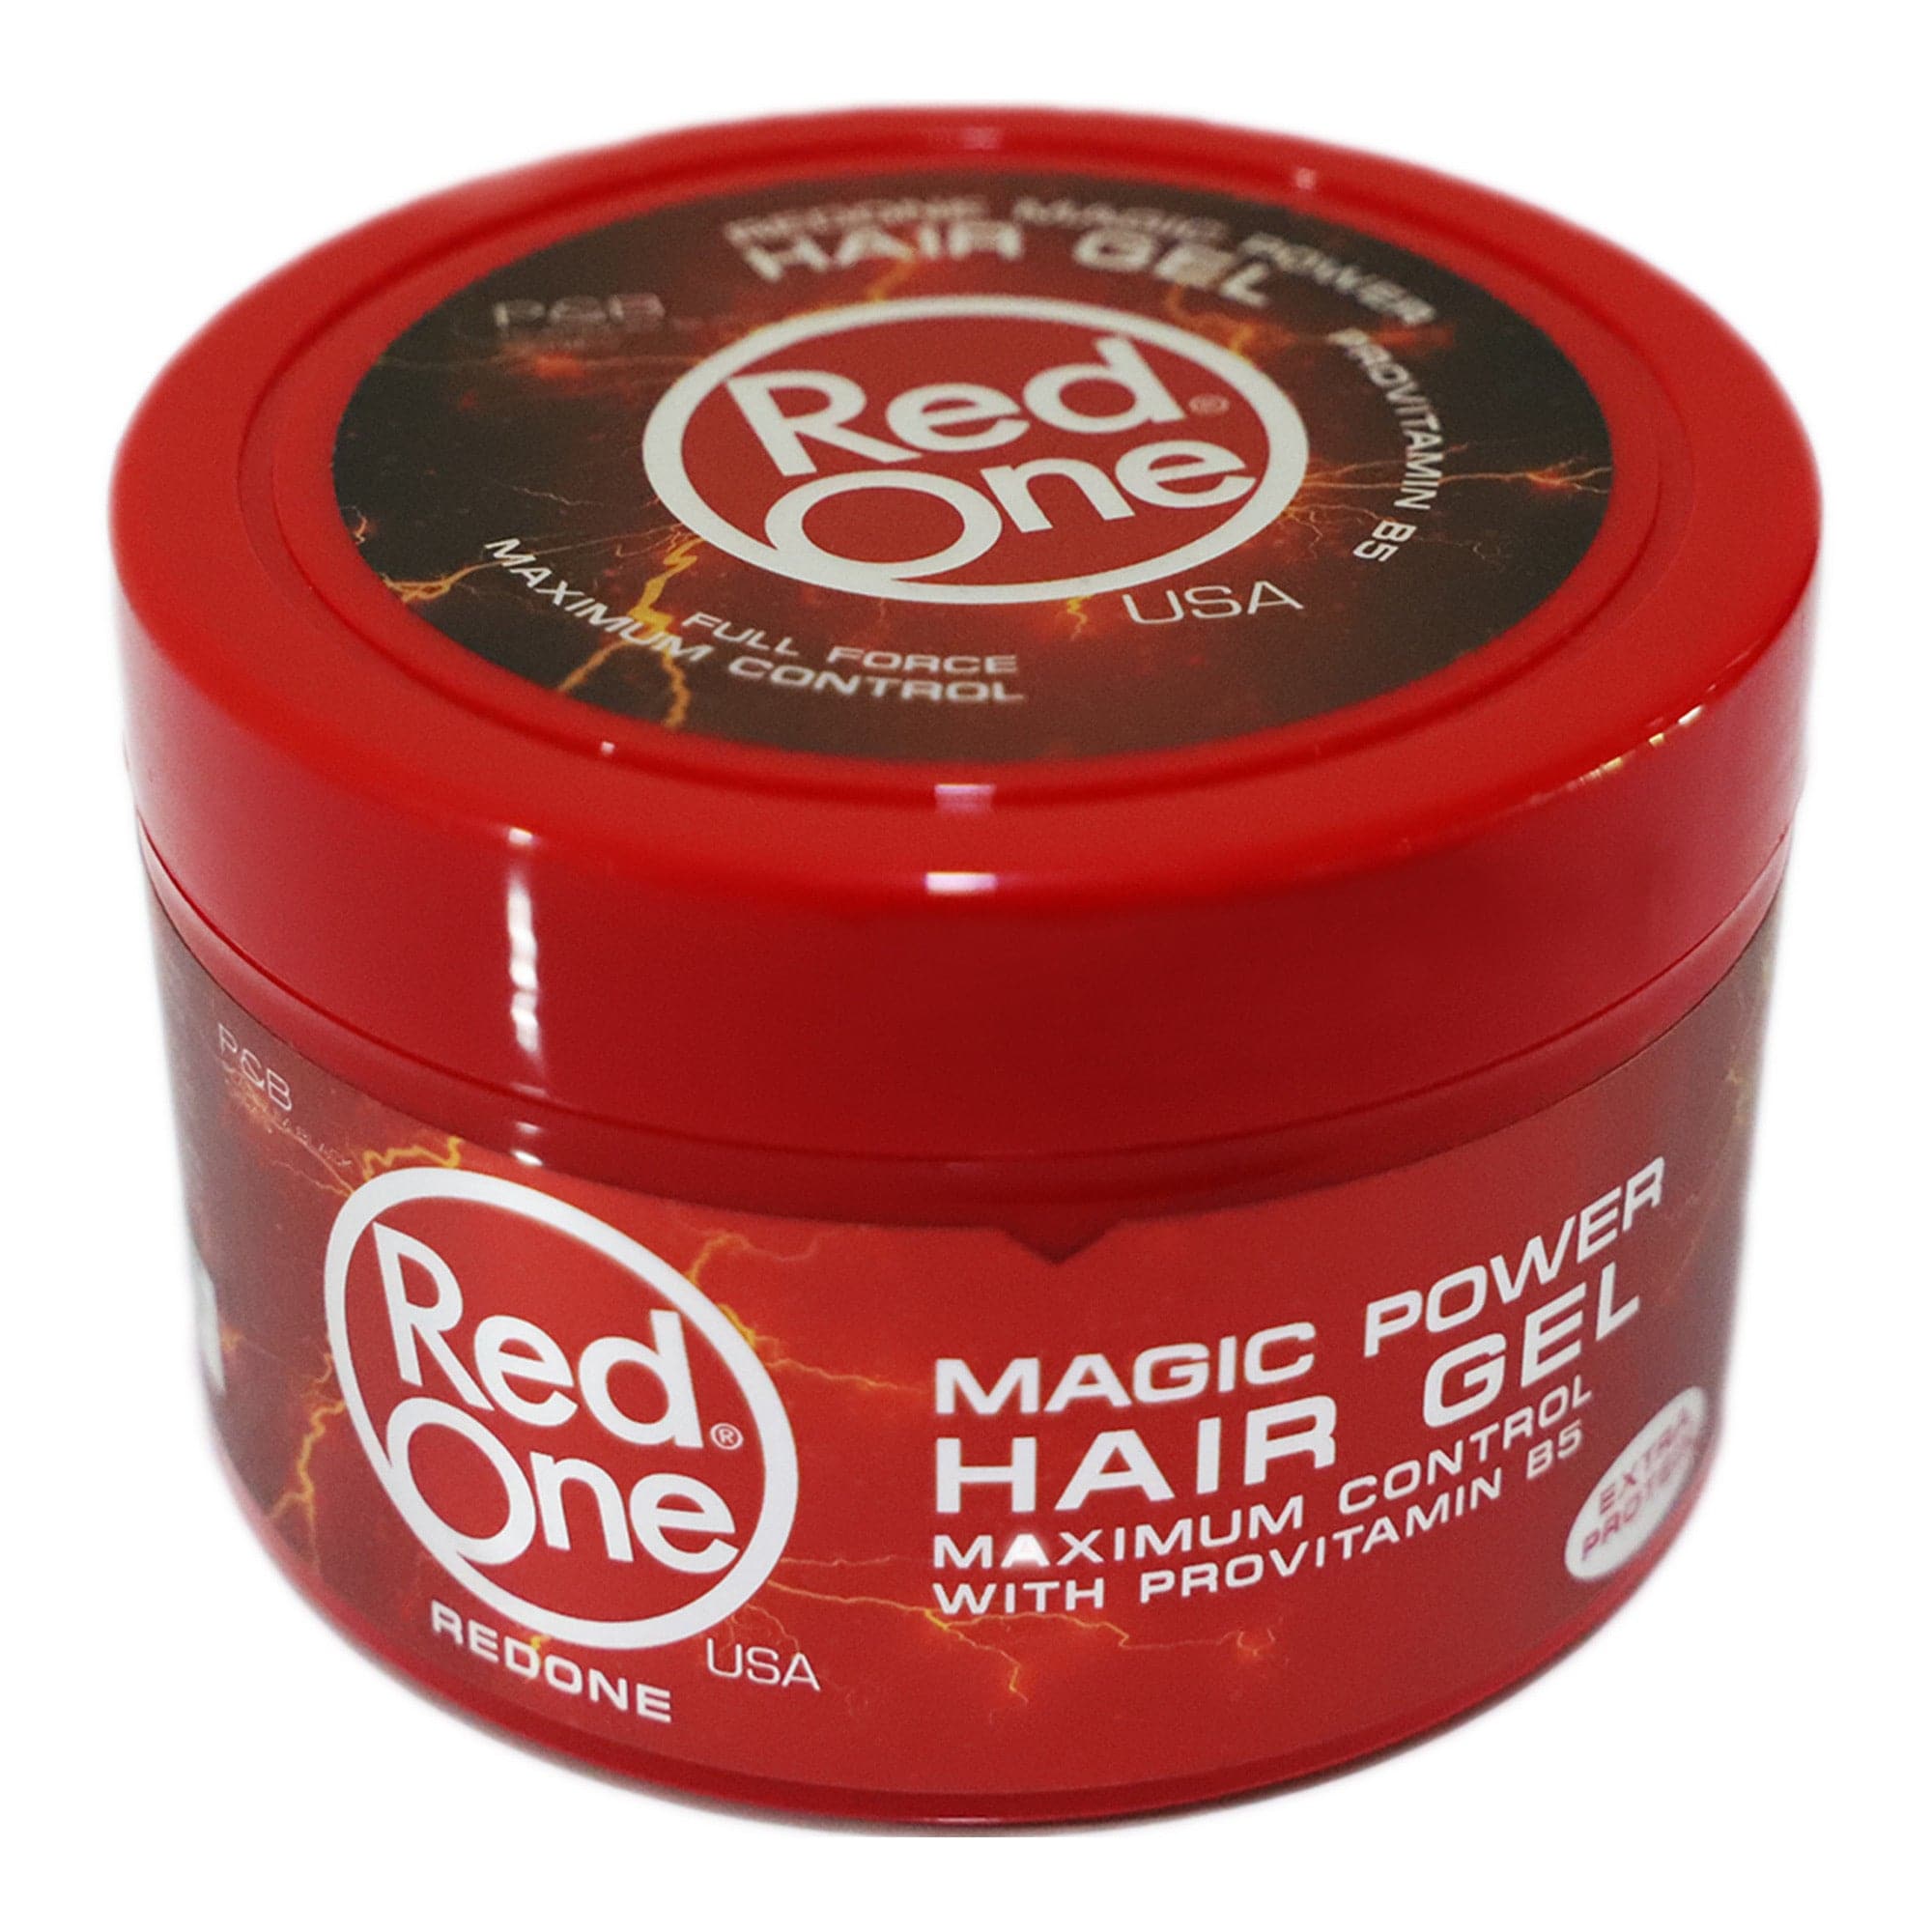 Redone - Hair Gel Magic Power Maximum Control 450ml